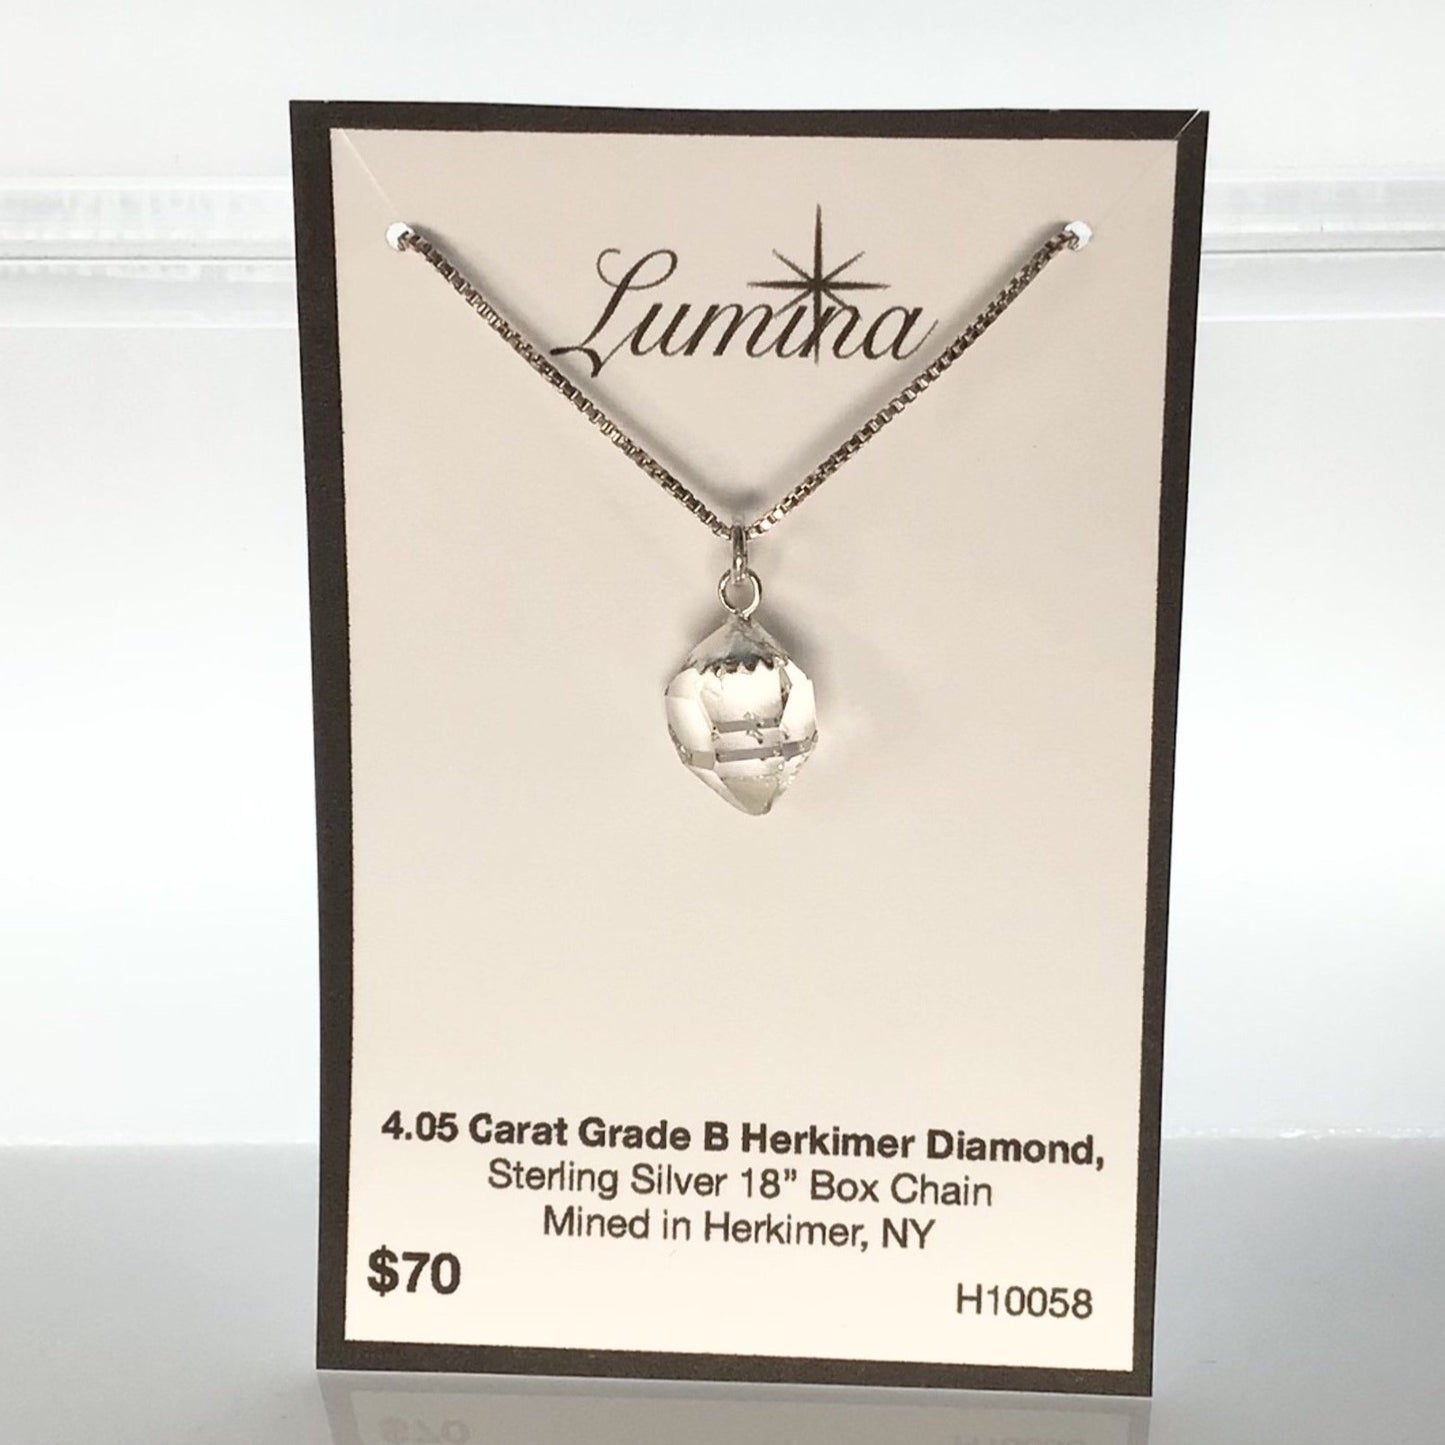 Herkimer Diamond 4.05 Carat Sterling Silver Necklace